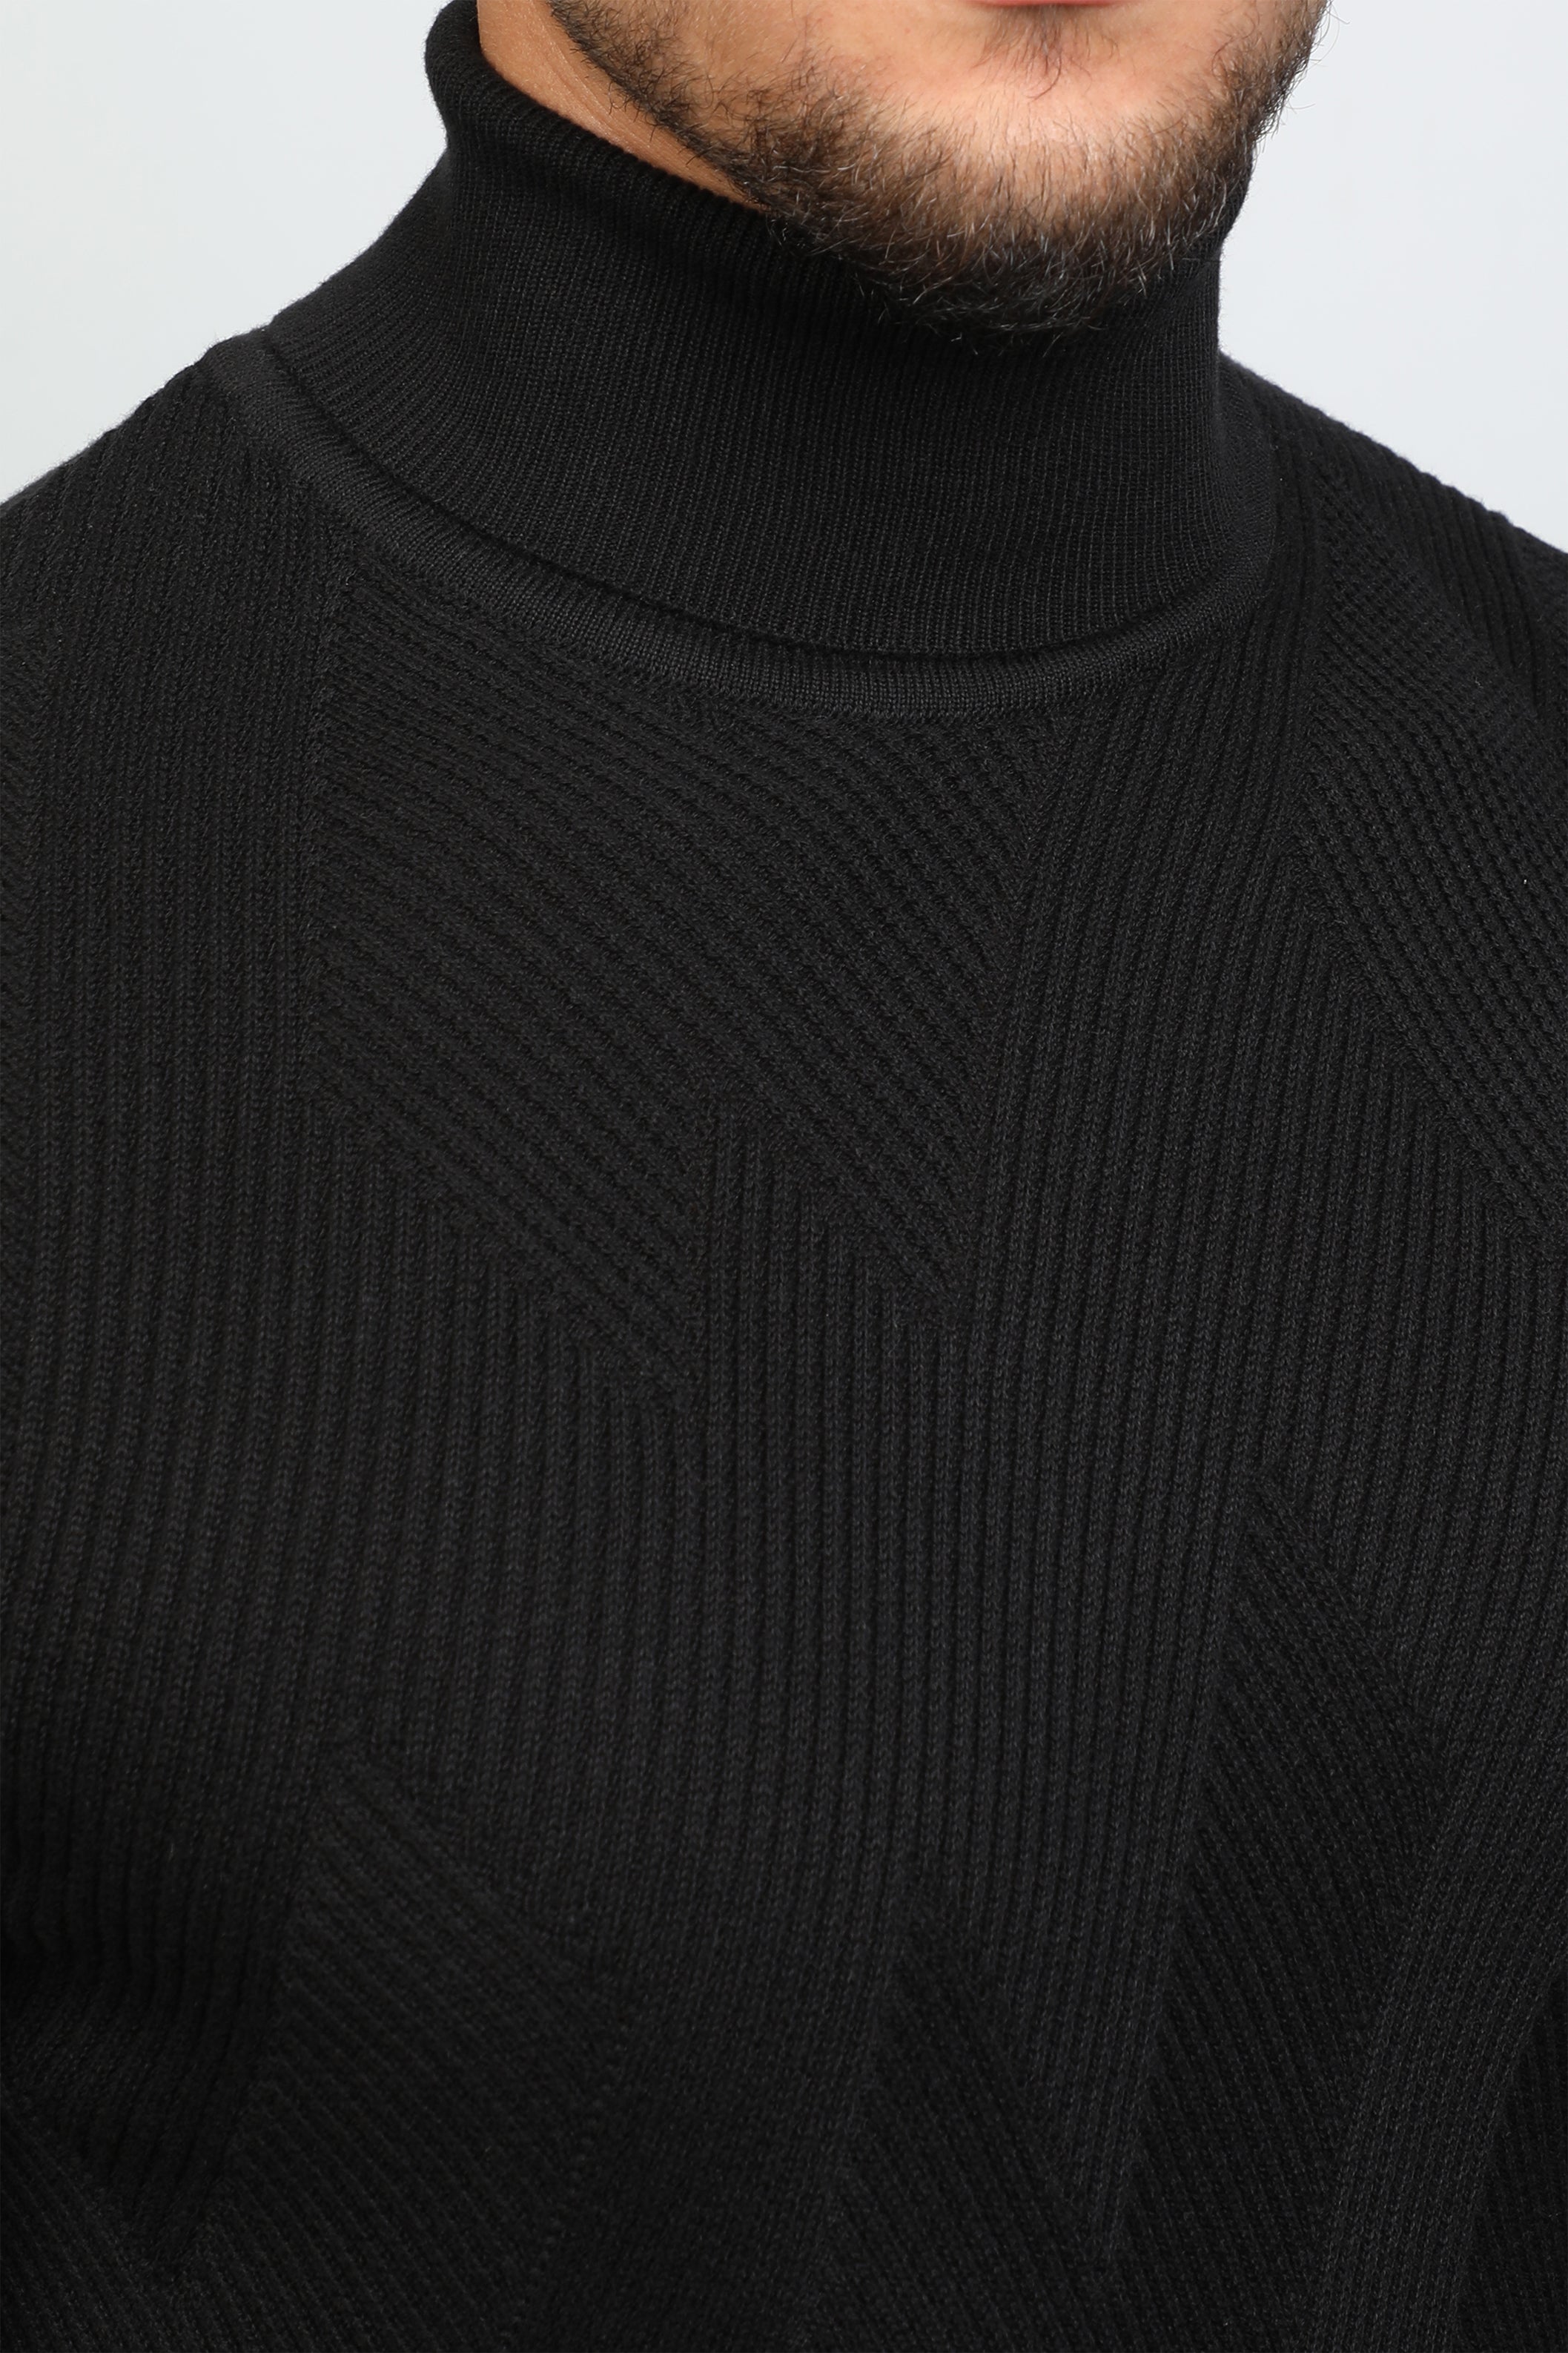 Men Classy Black Turtle Neck Patterned Sweater